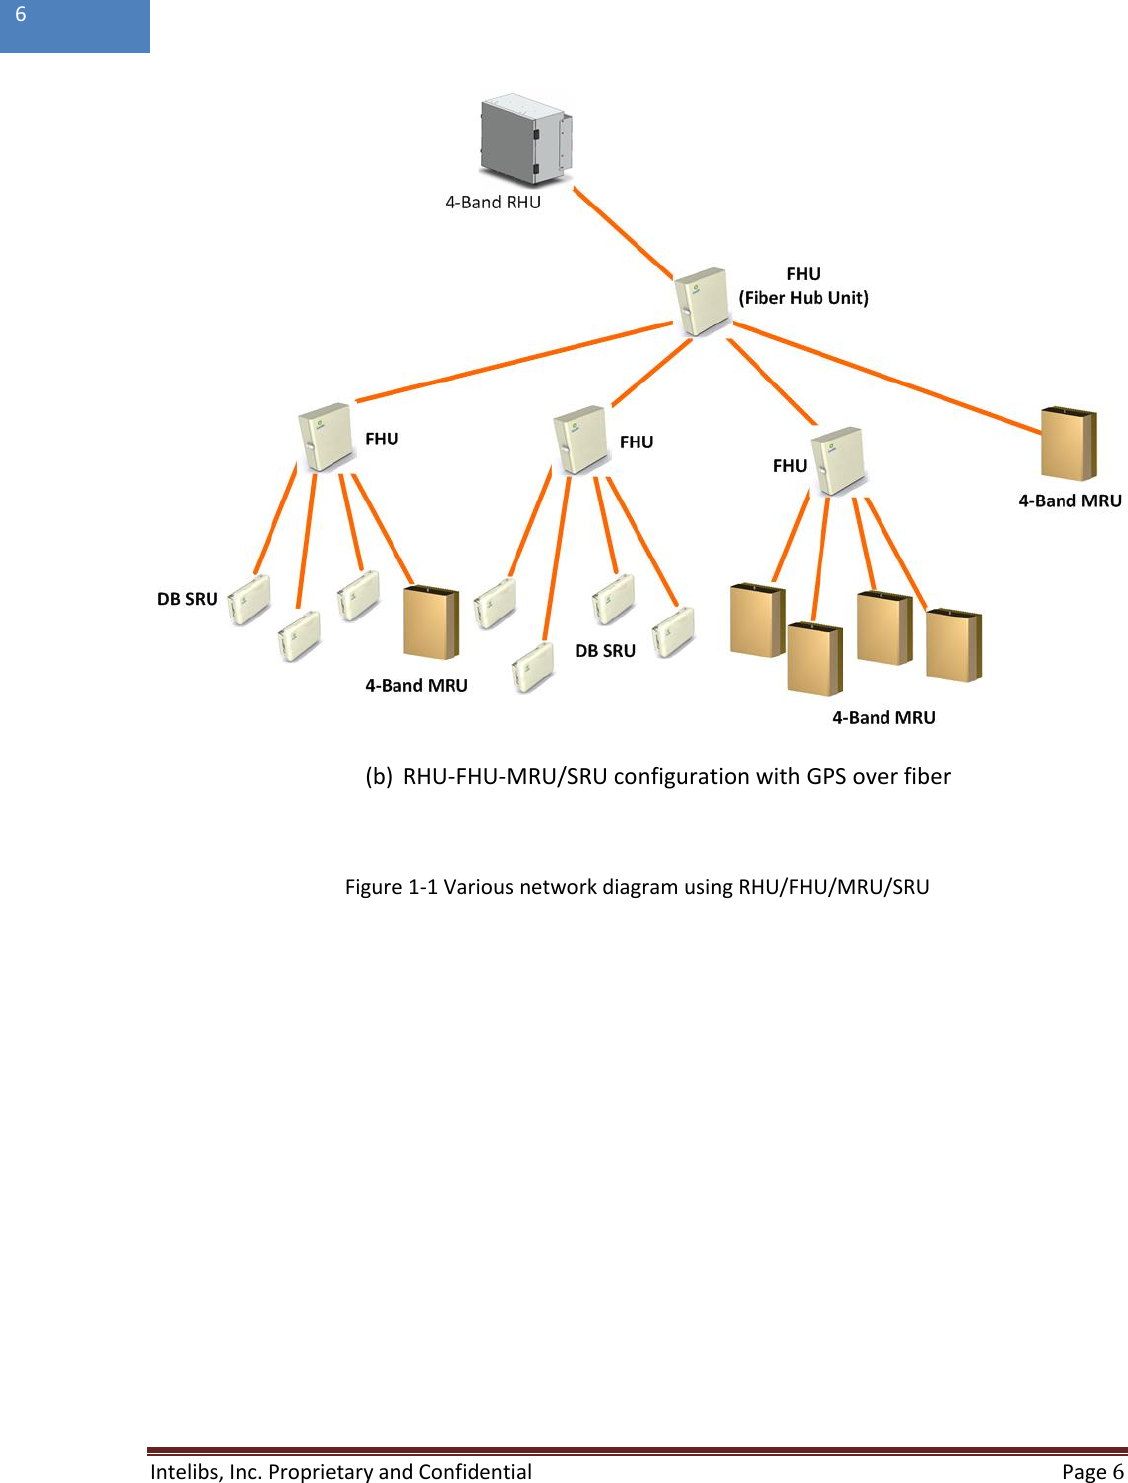  Intelibs, Inc. Proprietary and Confidential   Page 6  6   (b) RHU-FHU-MRU/SRU configuration with GPS over fiber  Figure 1-1 Various network diagram using RHU/FHU/MRU/SRU    